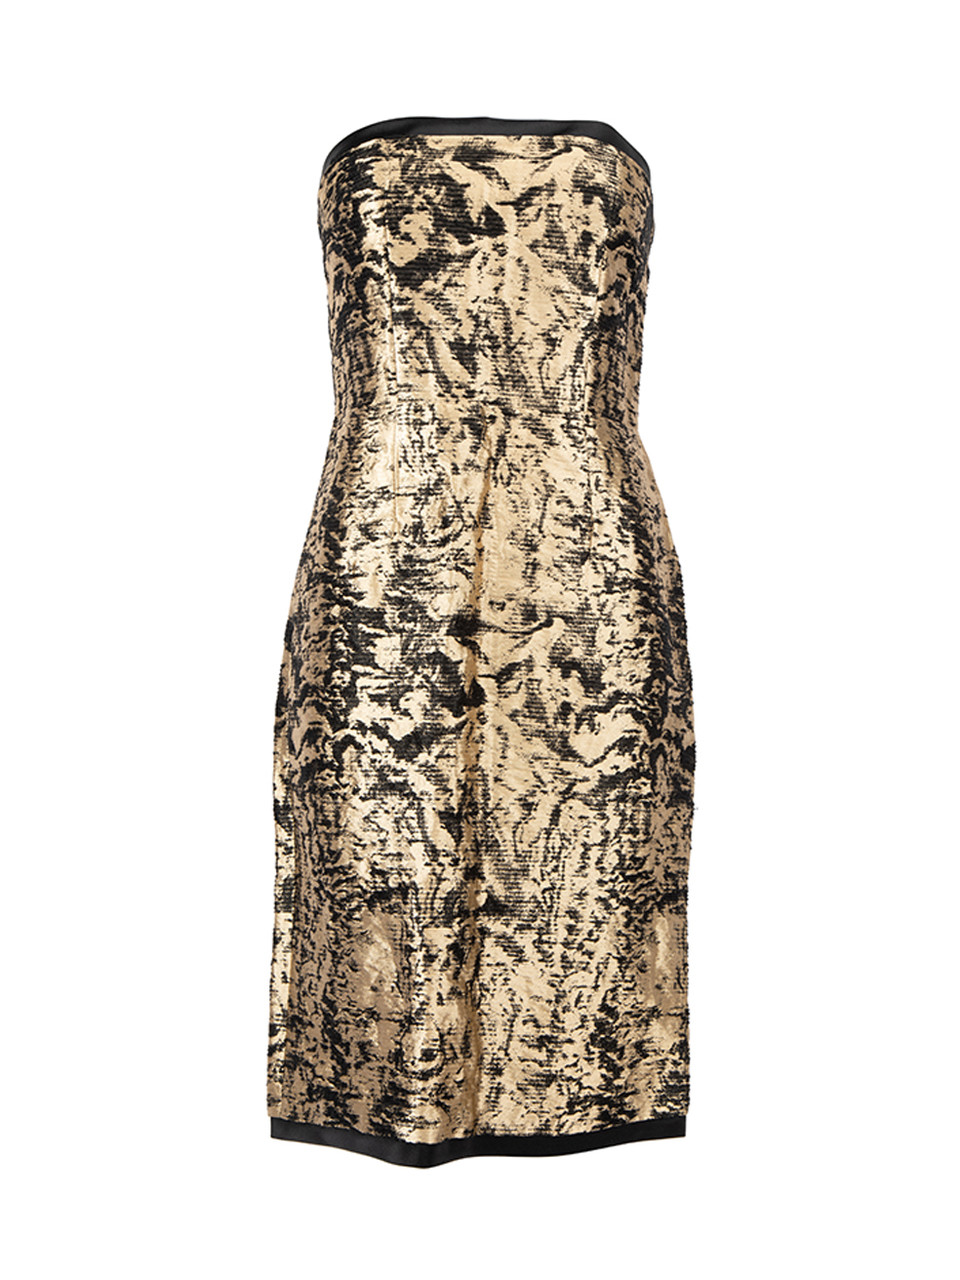 Carolina Herrera Gold & Black Mottled Pattern Strapless Mini Dress